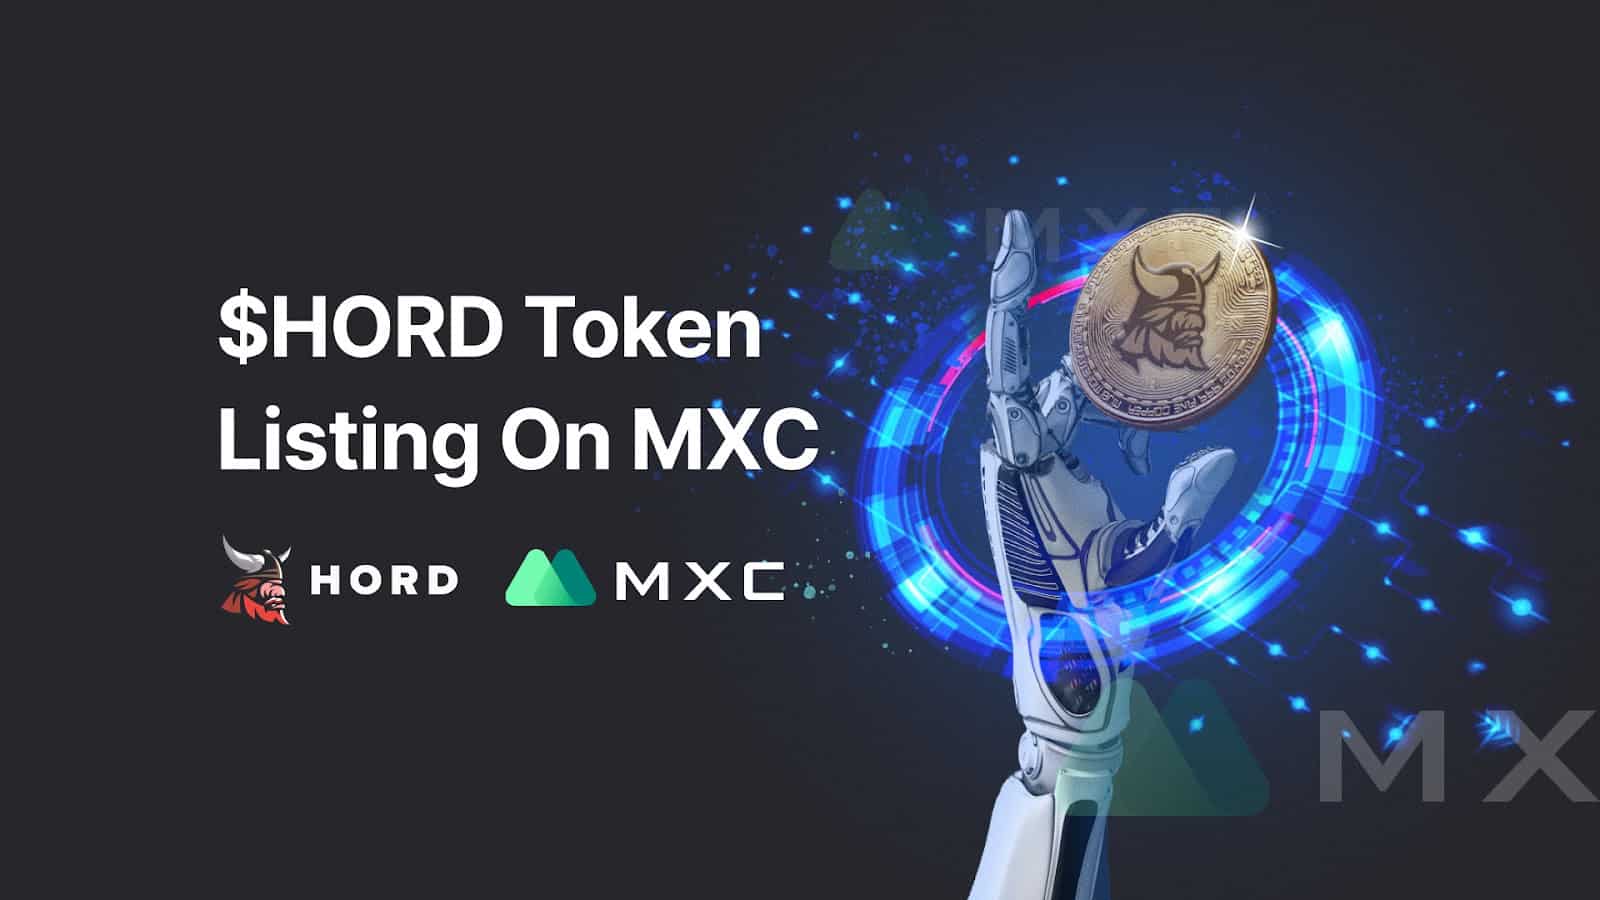 Social-defi-token-hord-listed-on-mxc-exchange